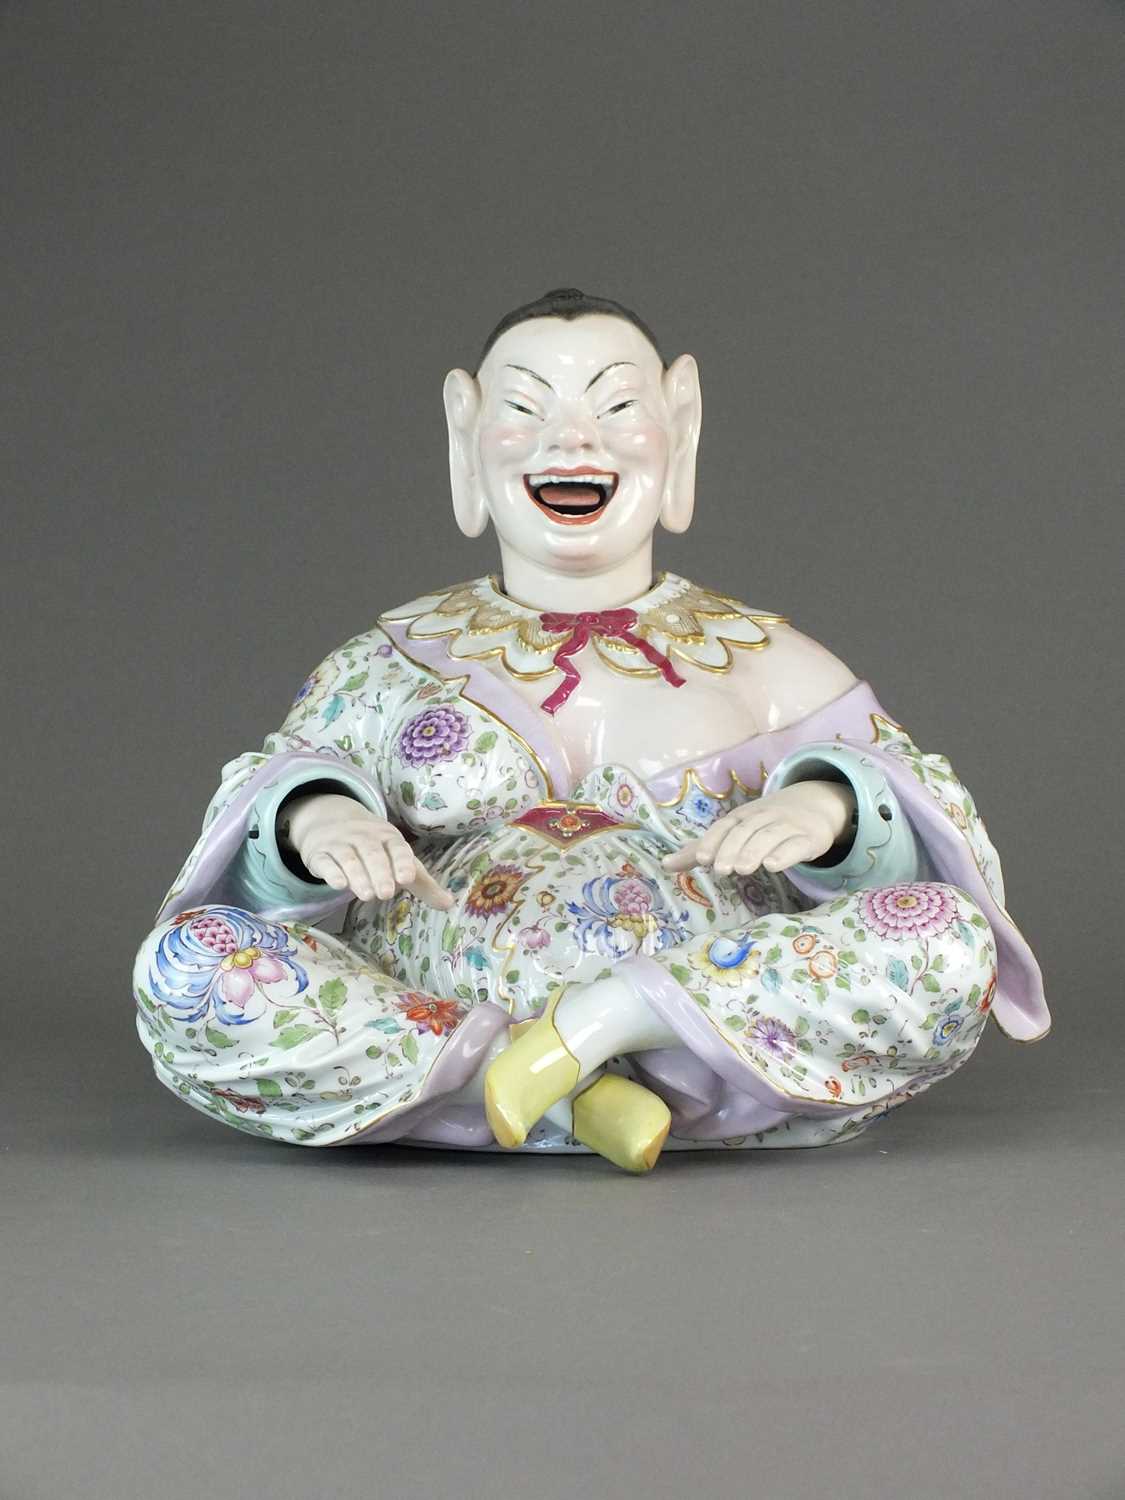 309 - A large Meissen porcelain nodding pagoda figure